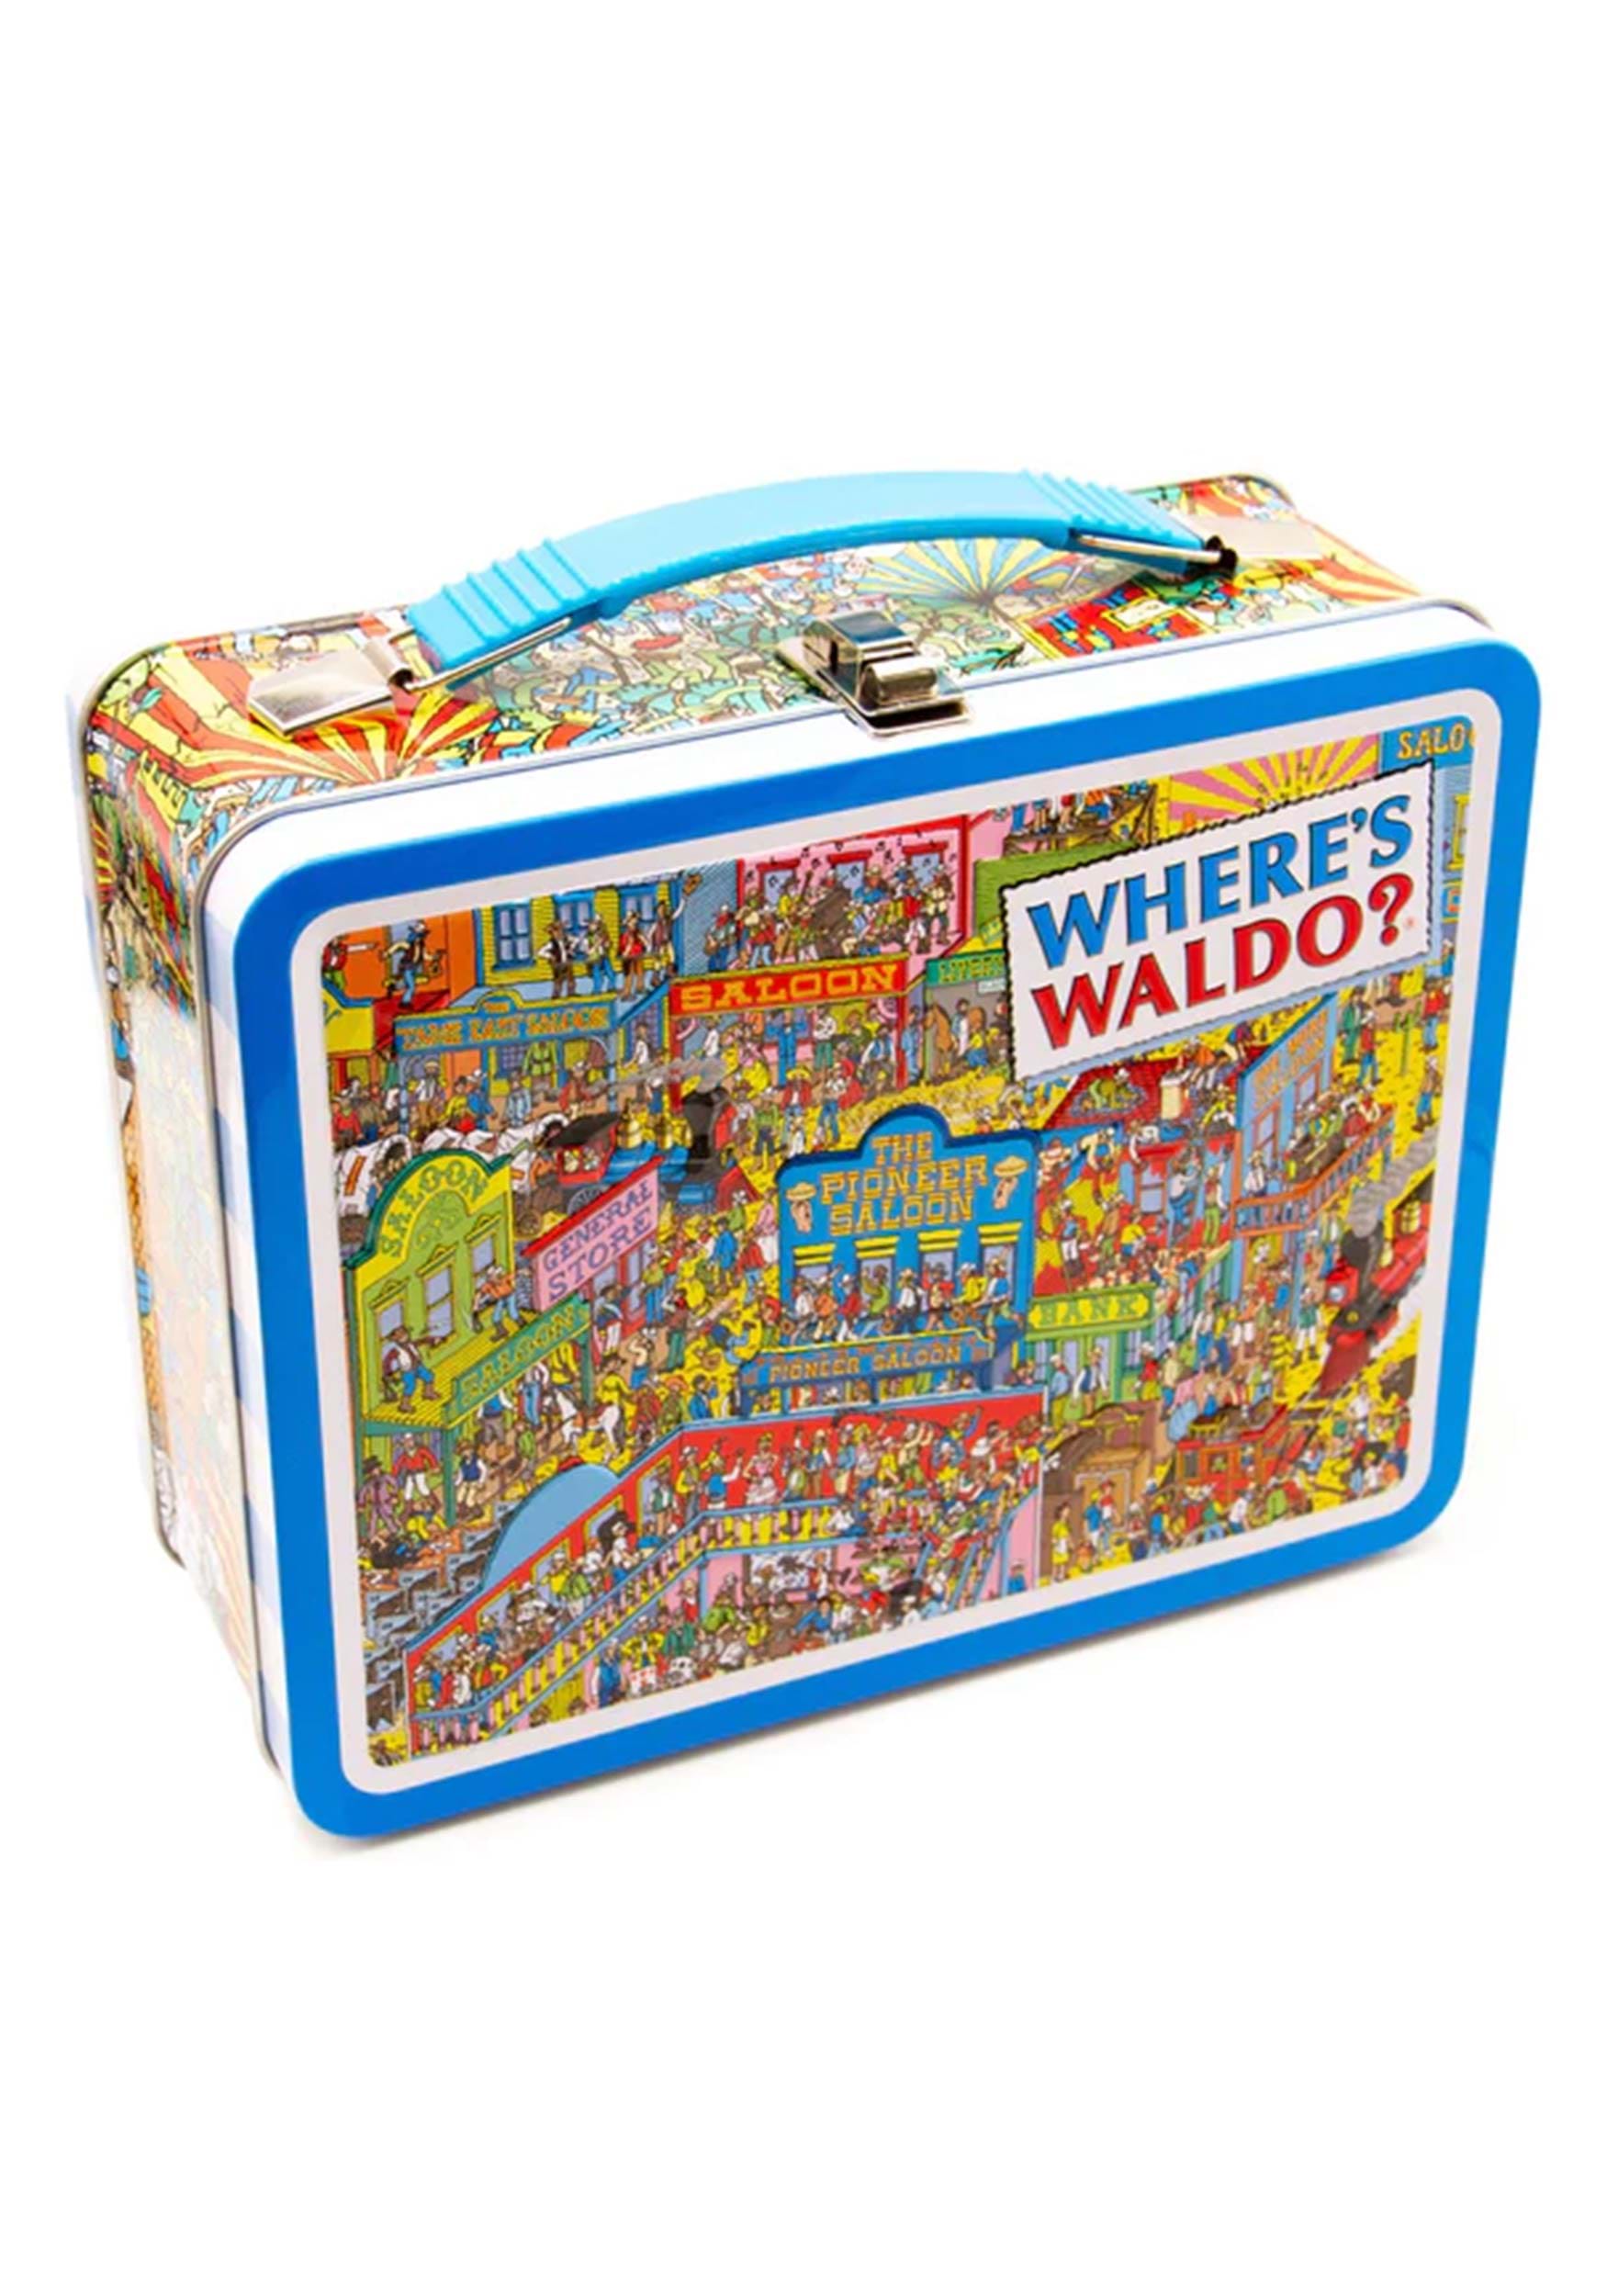 Wheres Waldo Metal Fun Box